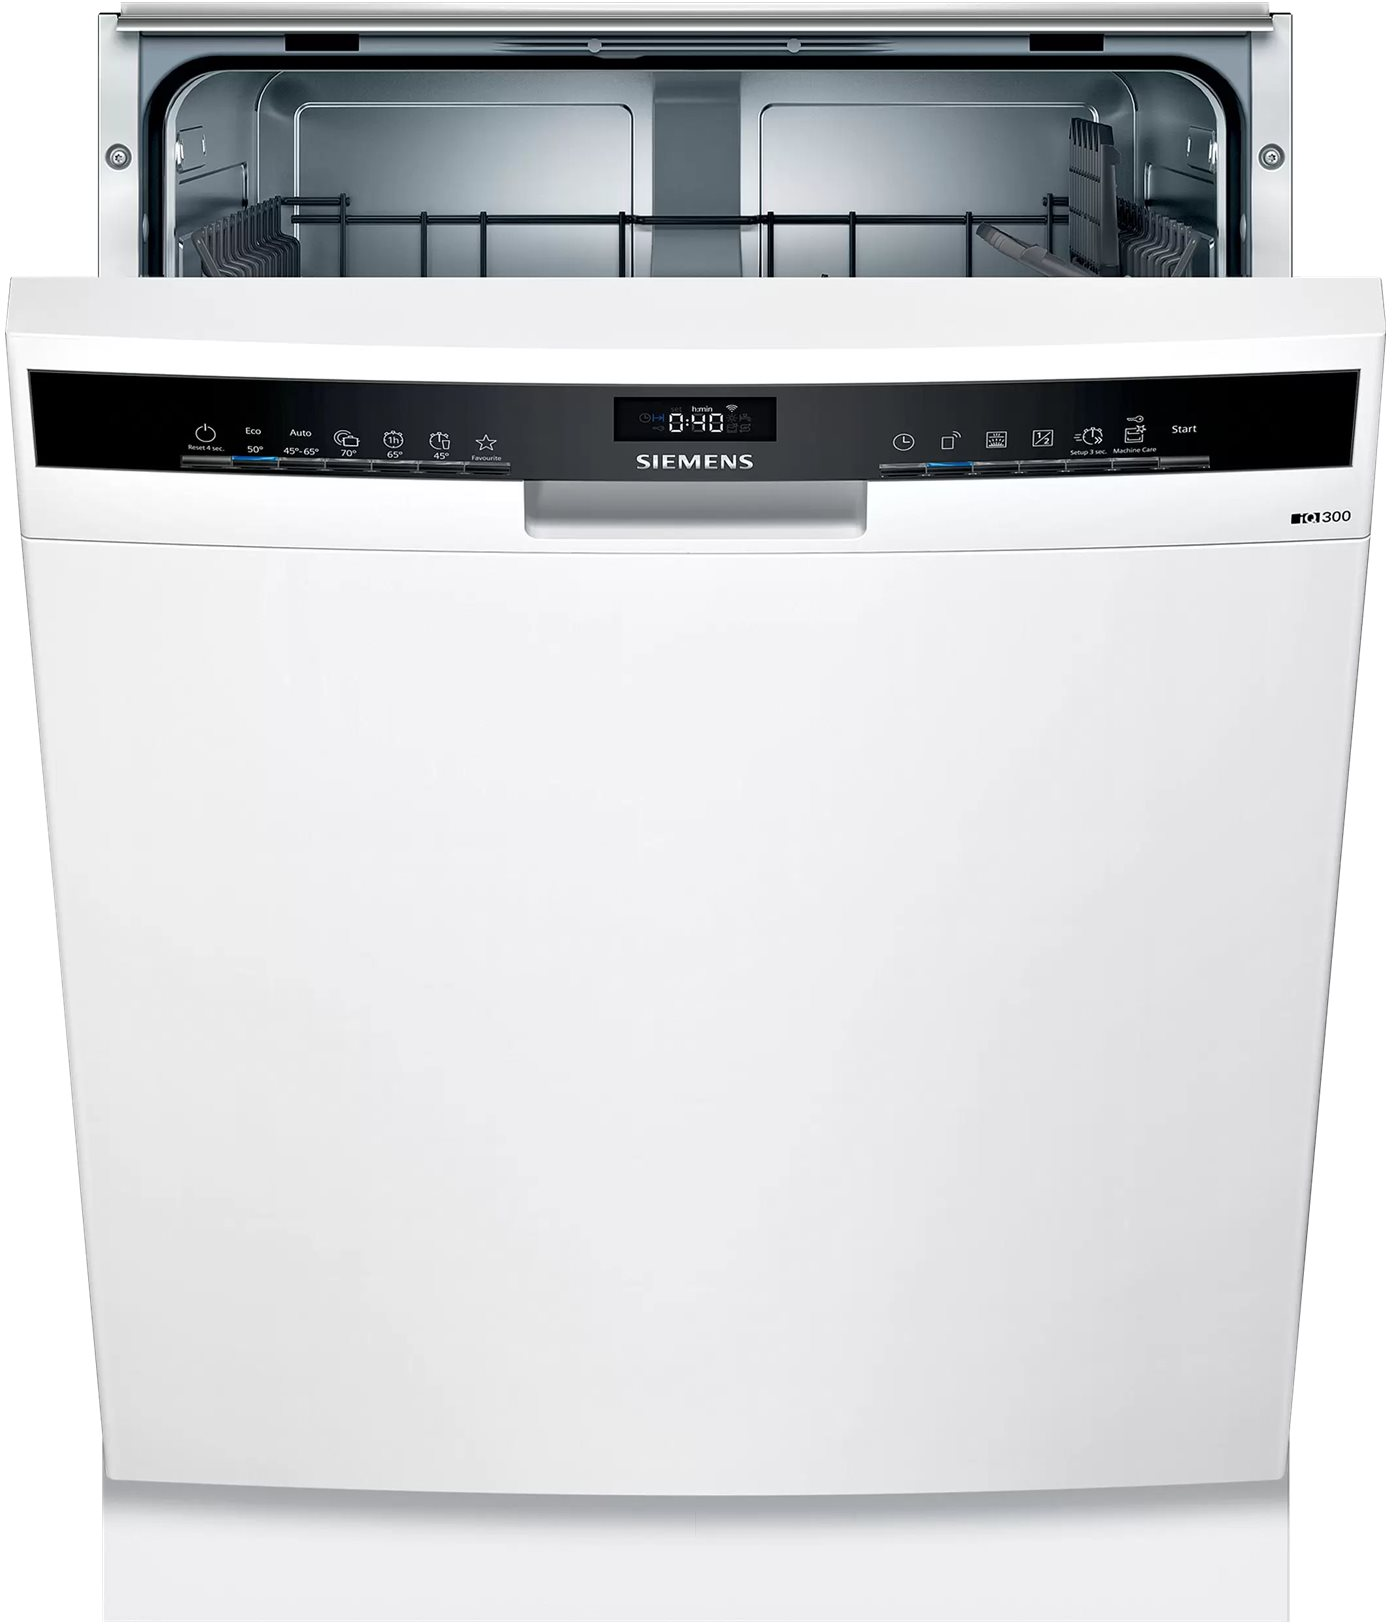 4242003876787 Siemens SN43IW08TS - Opvaskemaskine til indbygning Hvidevarer,Opvaskemaskine,Opvaskemaskiner til indbygning 11400005600 SN43IW08TS